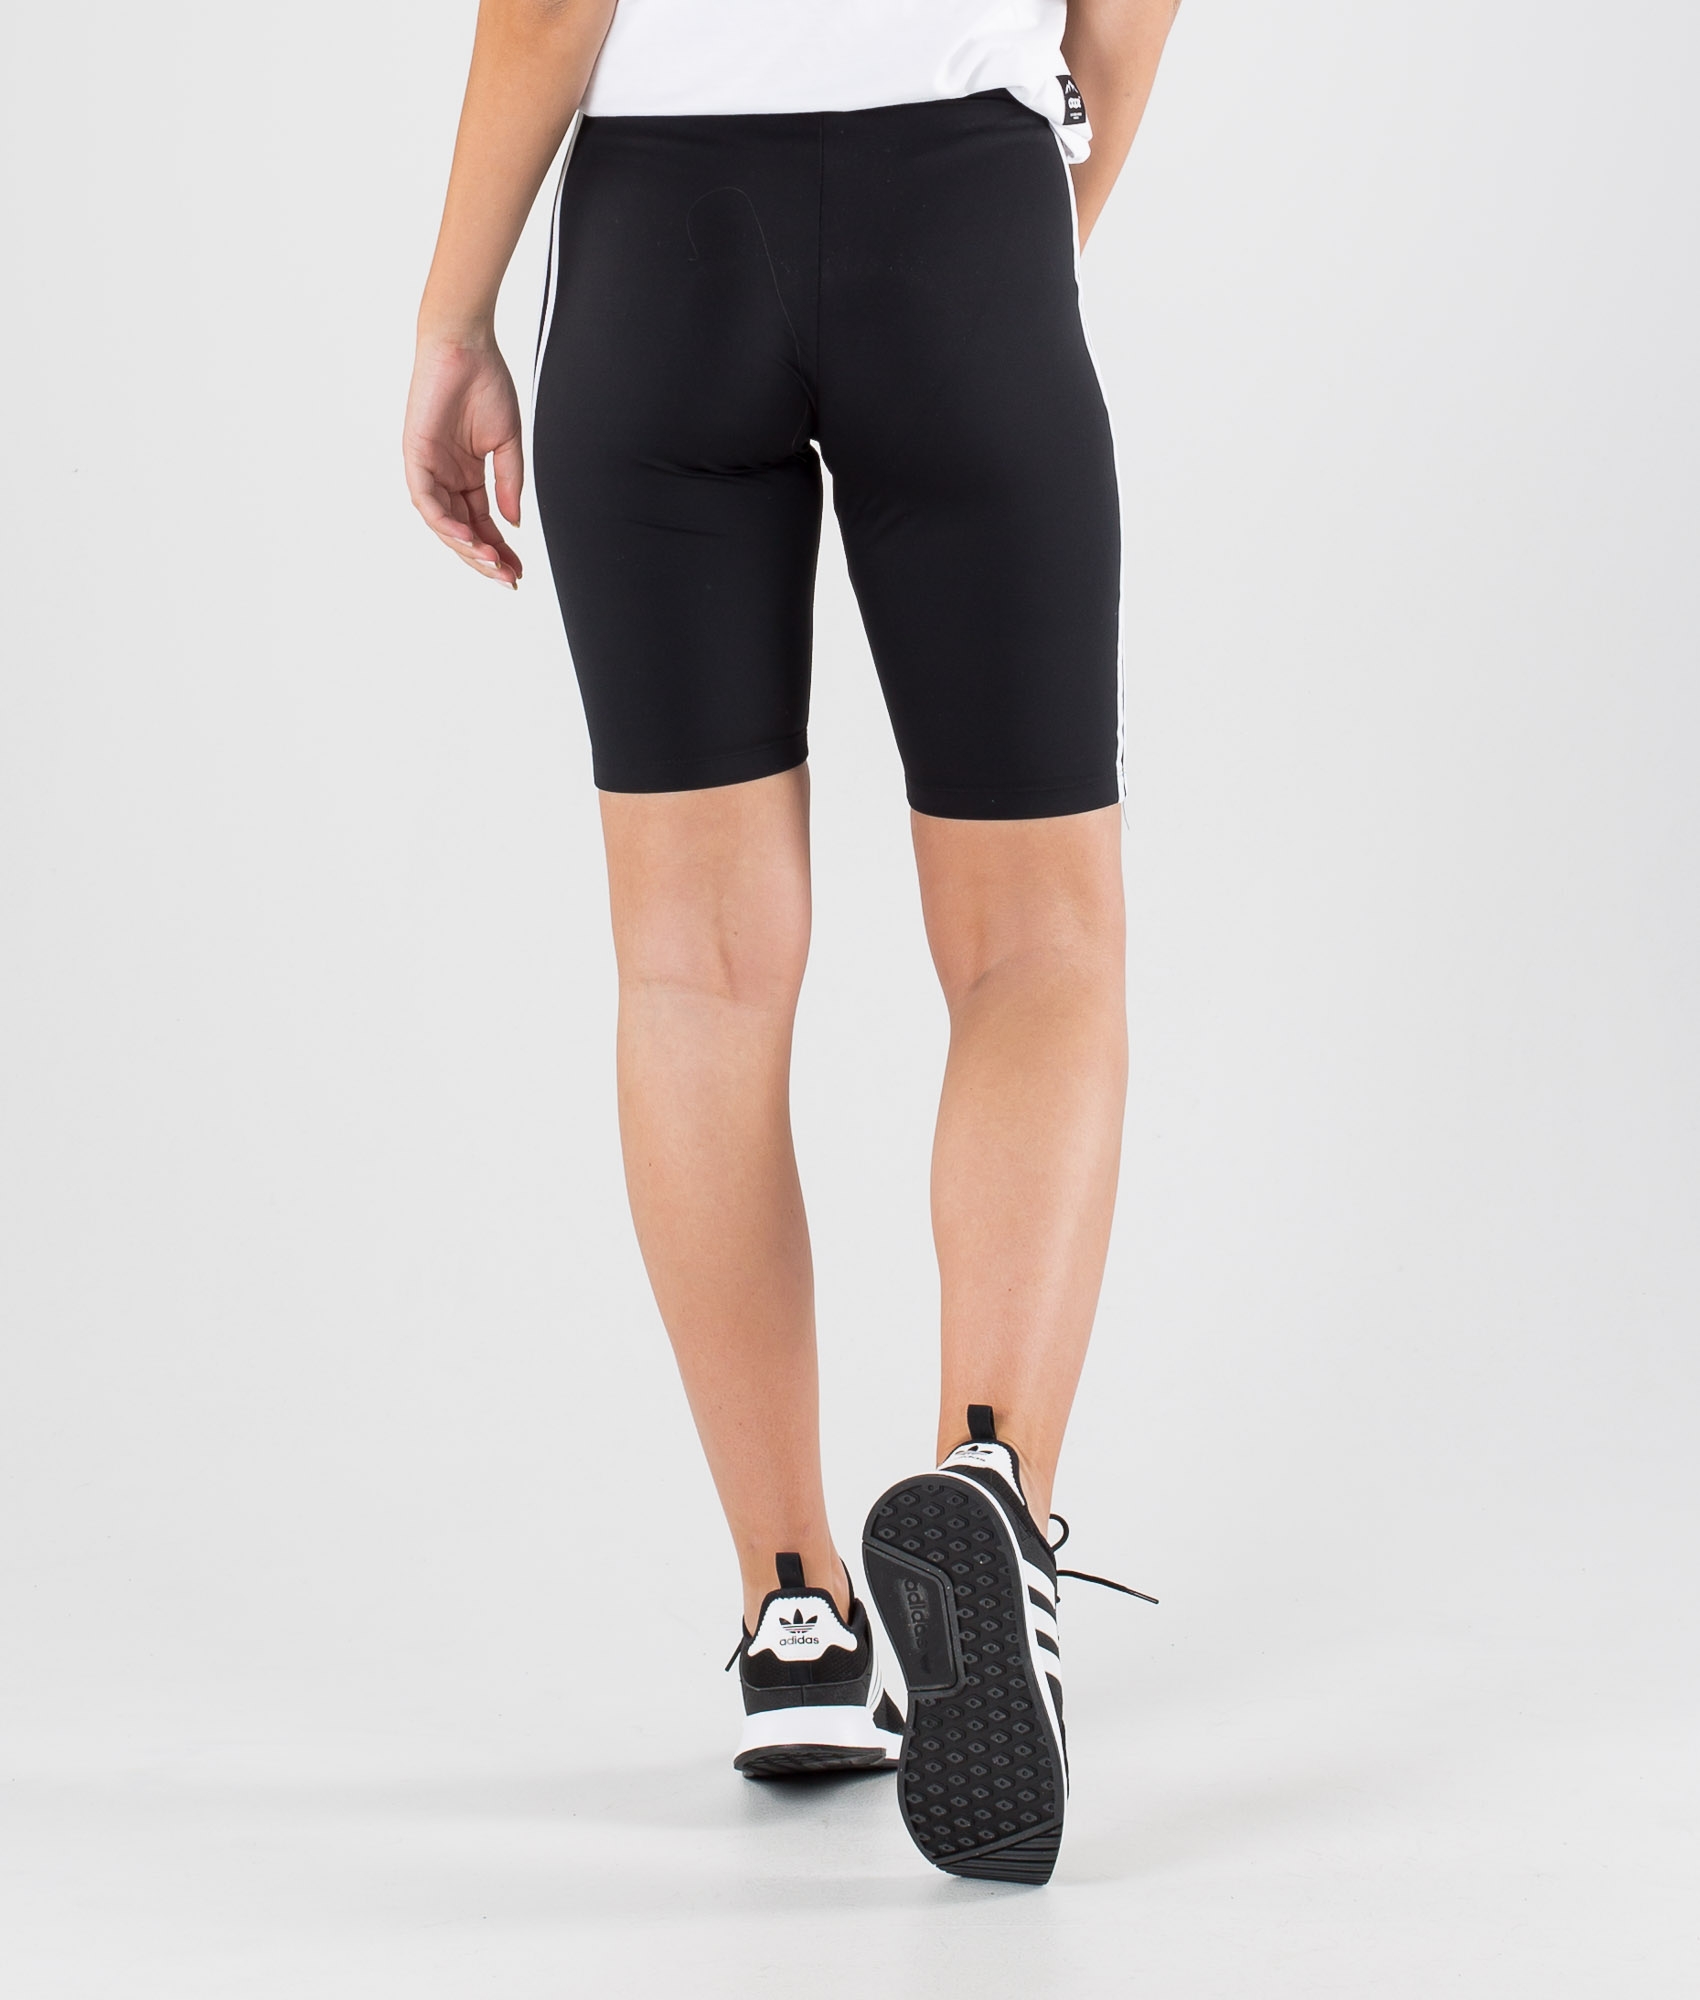 black short cycling shorts